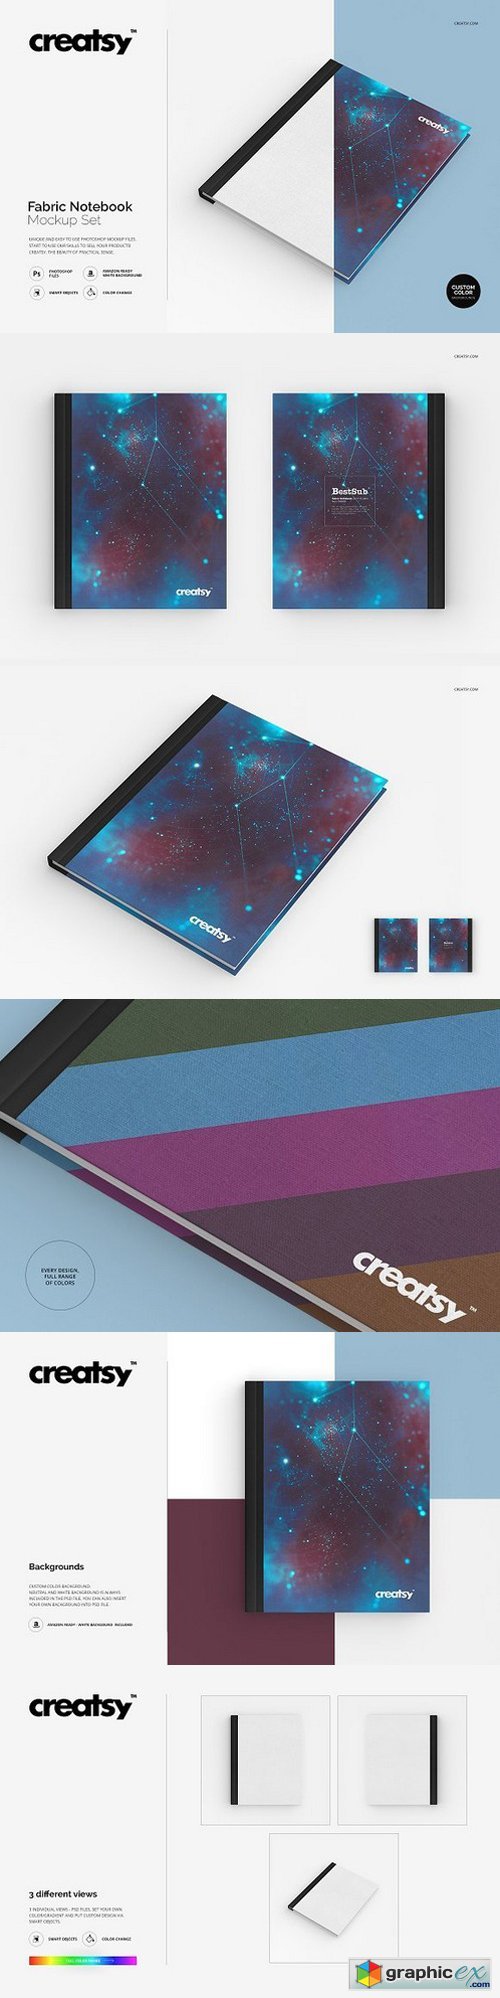 Fabric Notebook Mockup Set